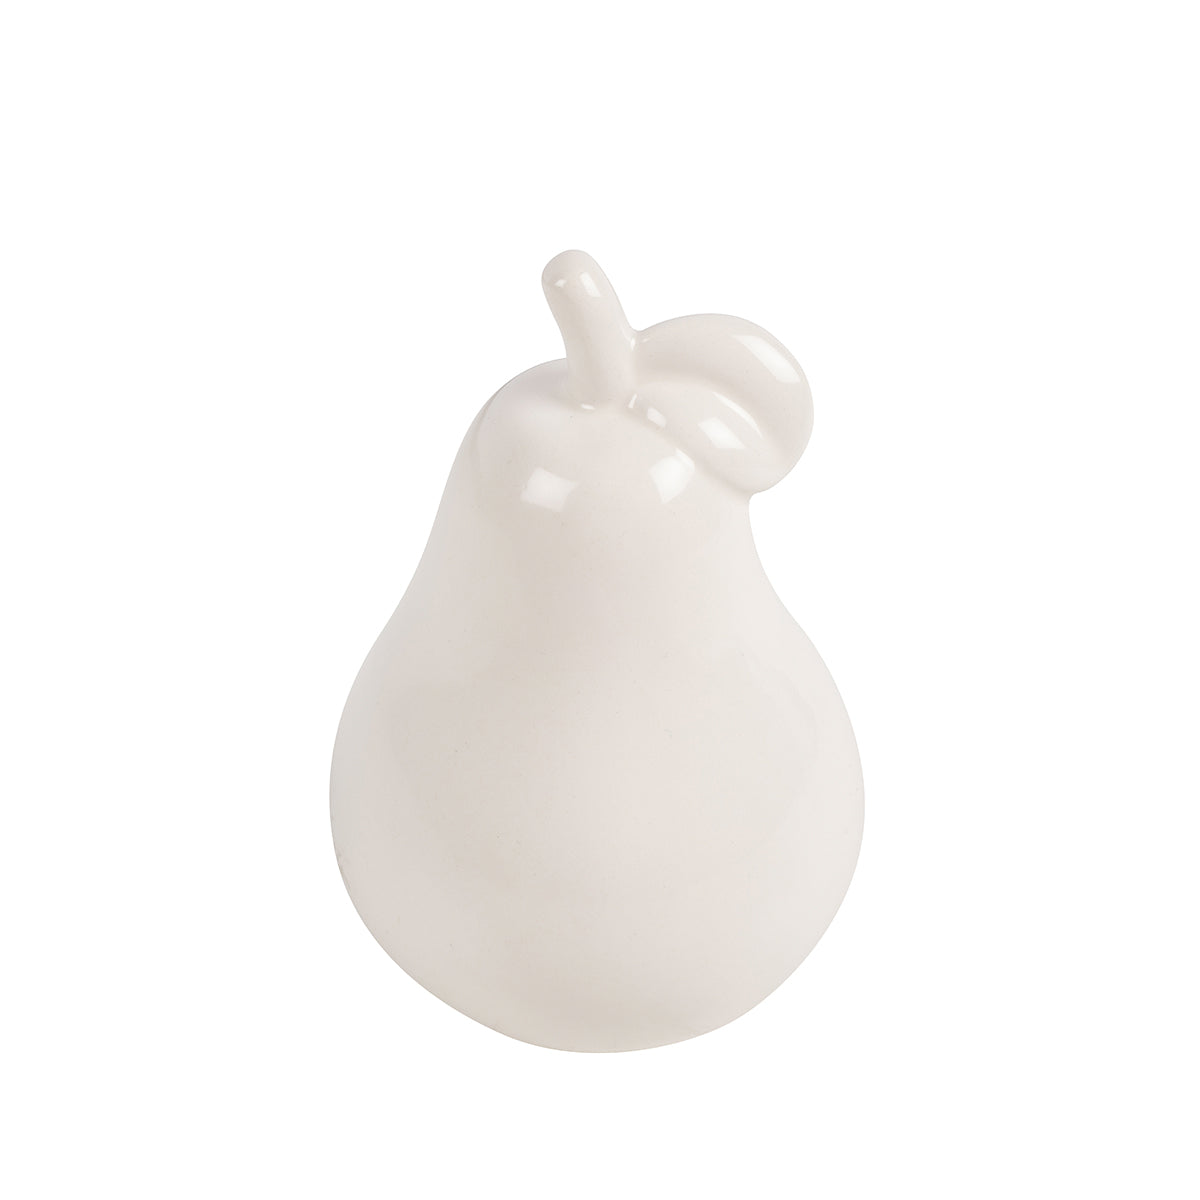 Ceramic Pear Decor 13 x 8.5 x 8.5cm